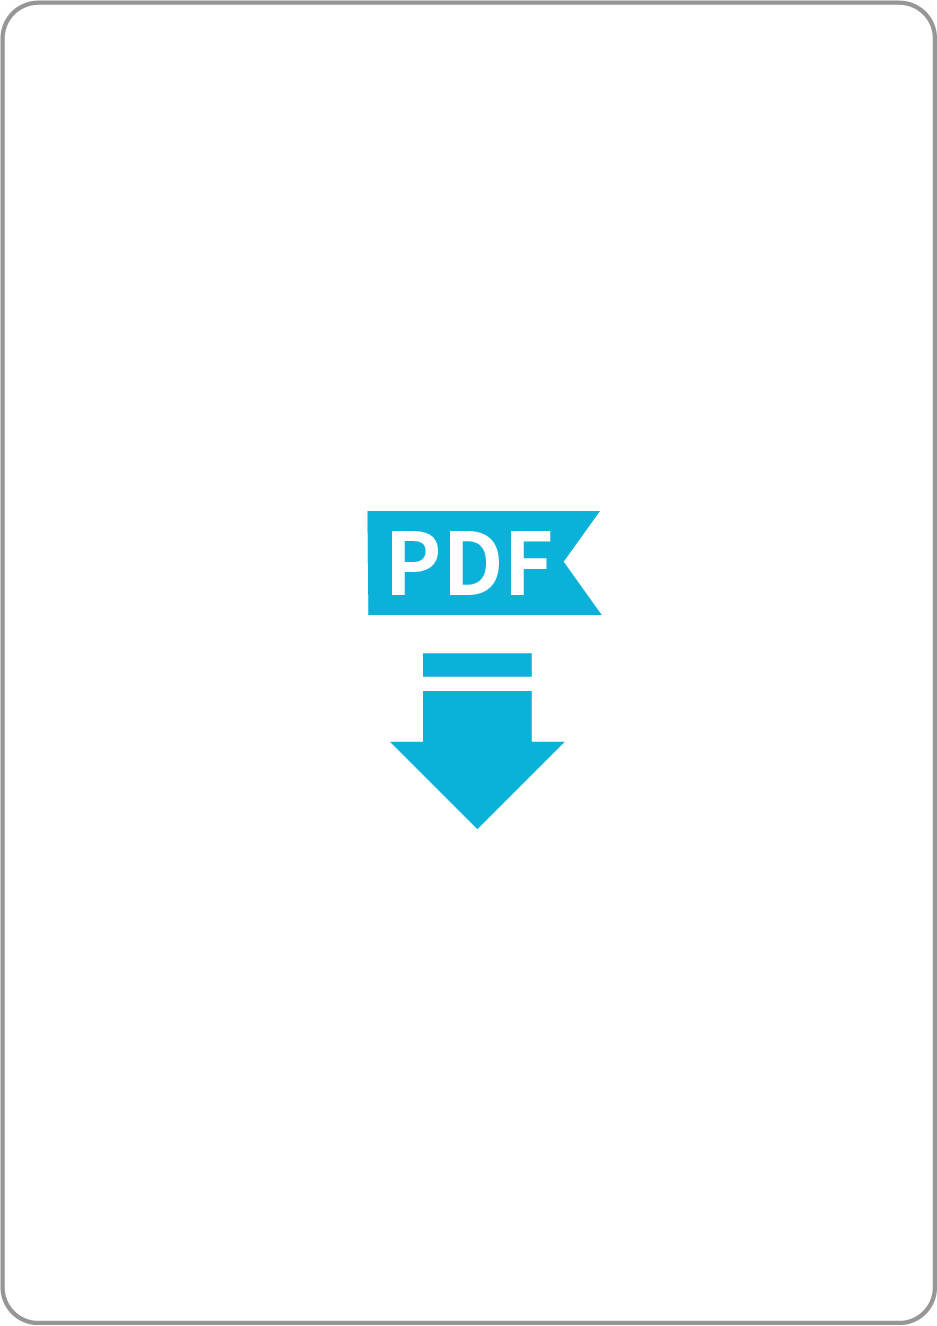 PDF logo new